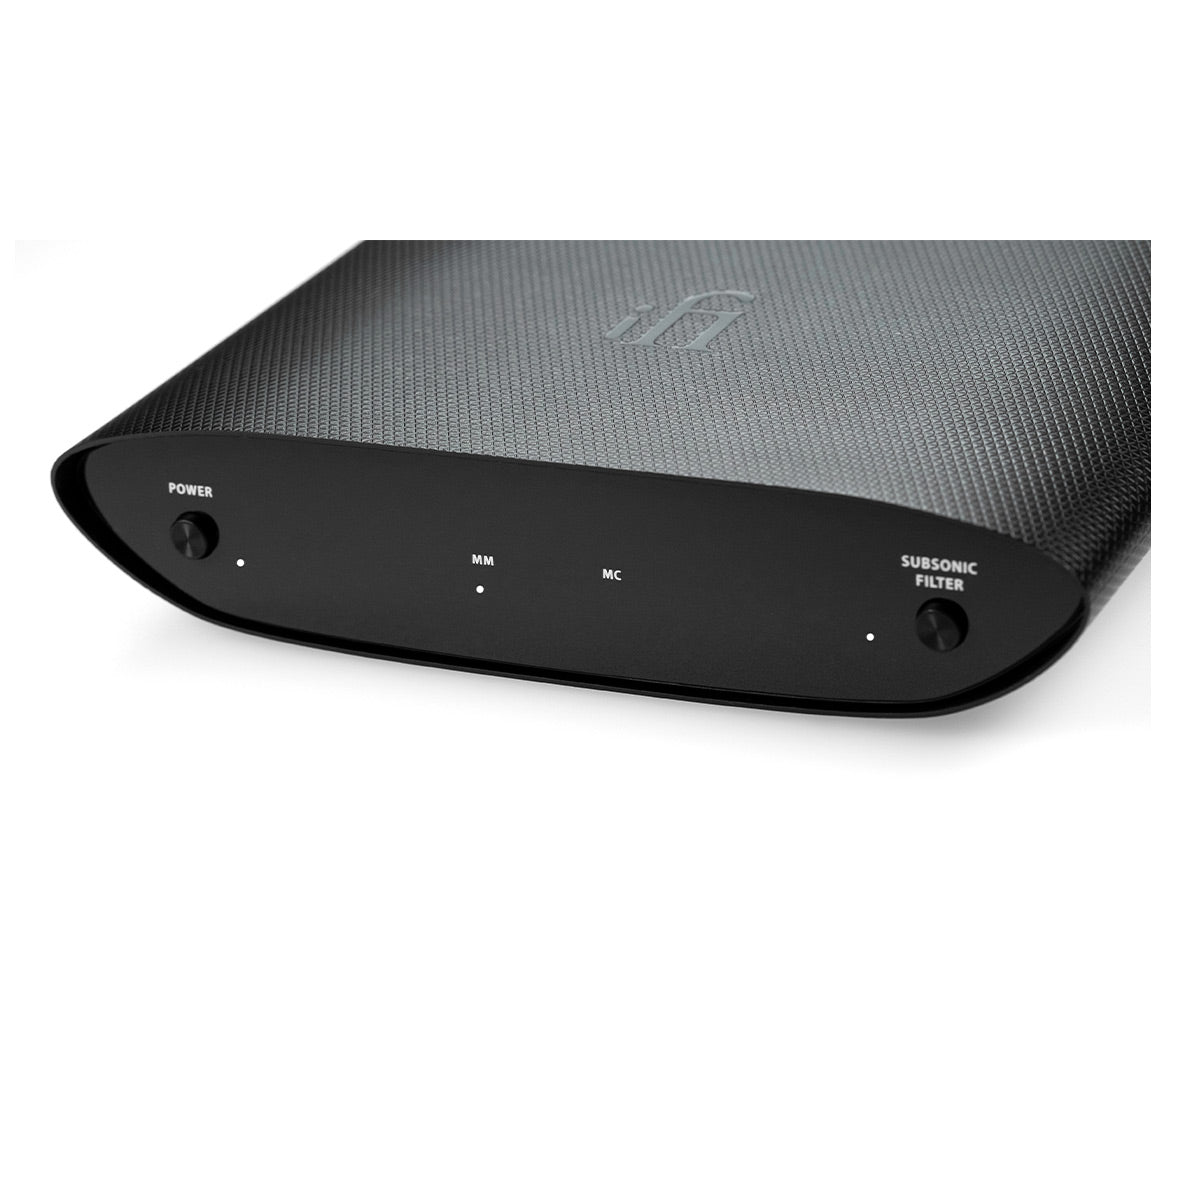 iFi Audio ZEN Air Phono External Turntable Phono Preamplifier